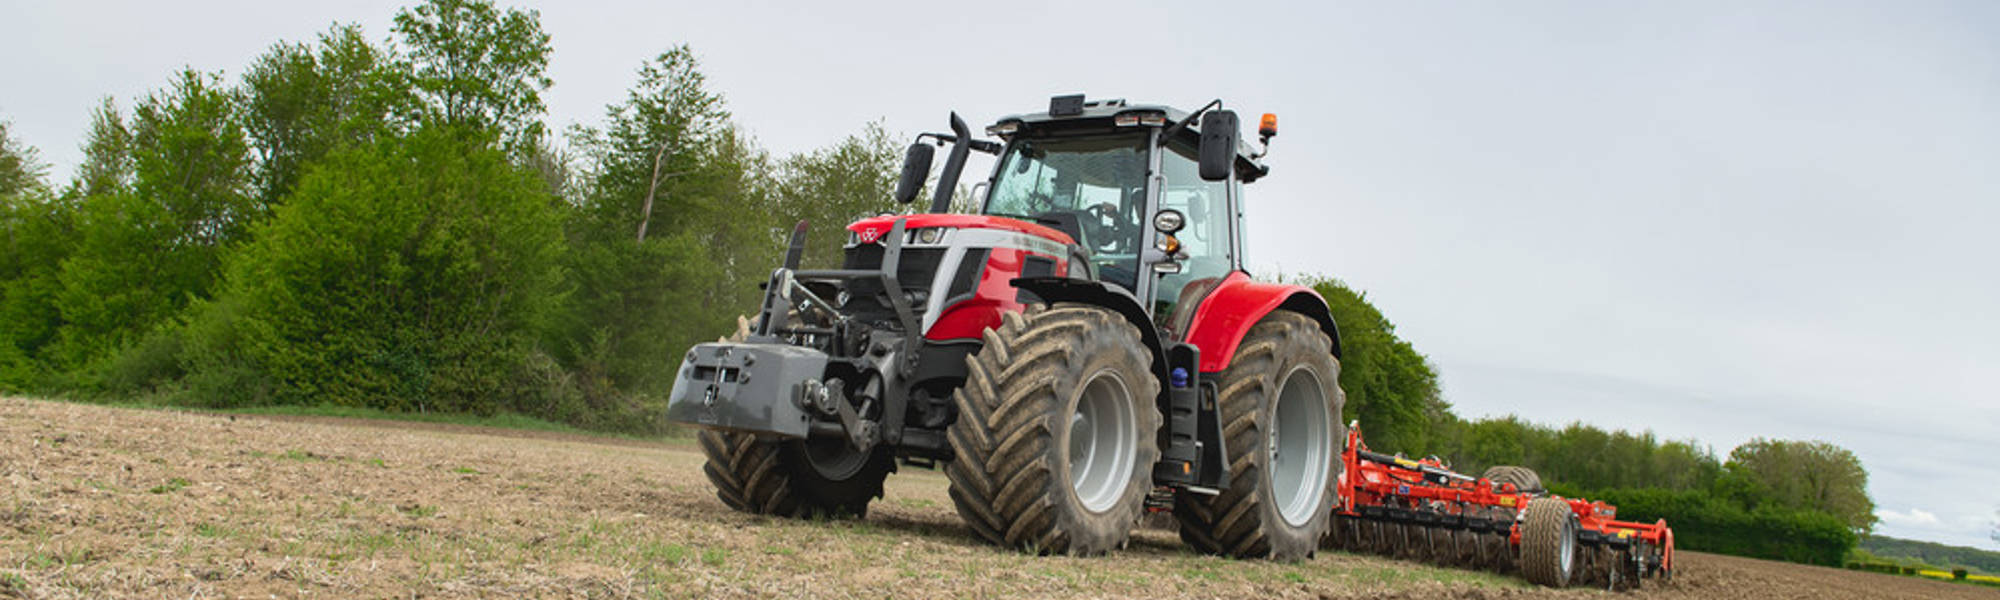 MF 6S Series Tractors 